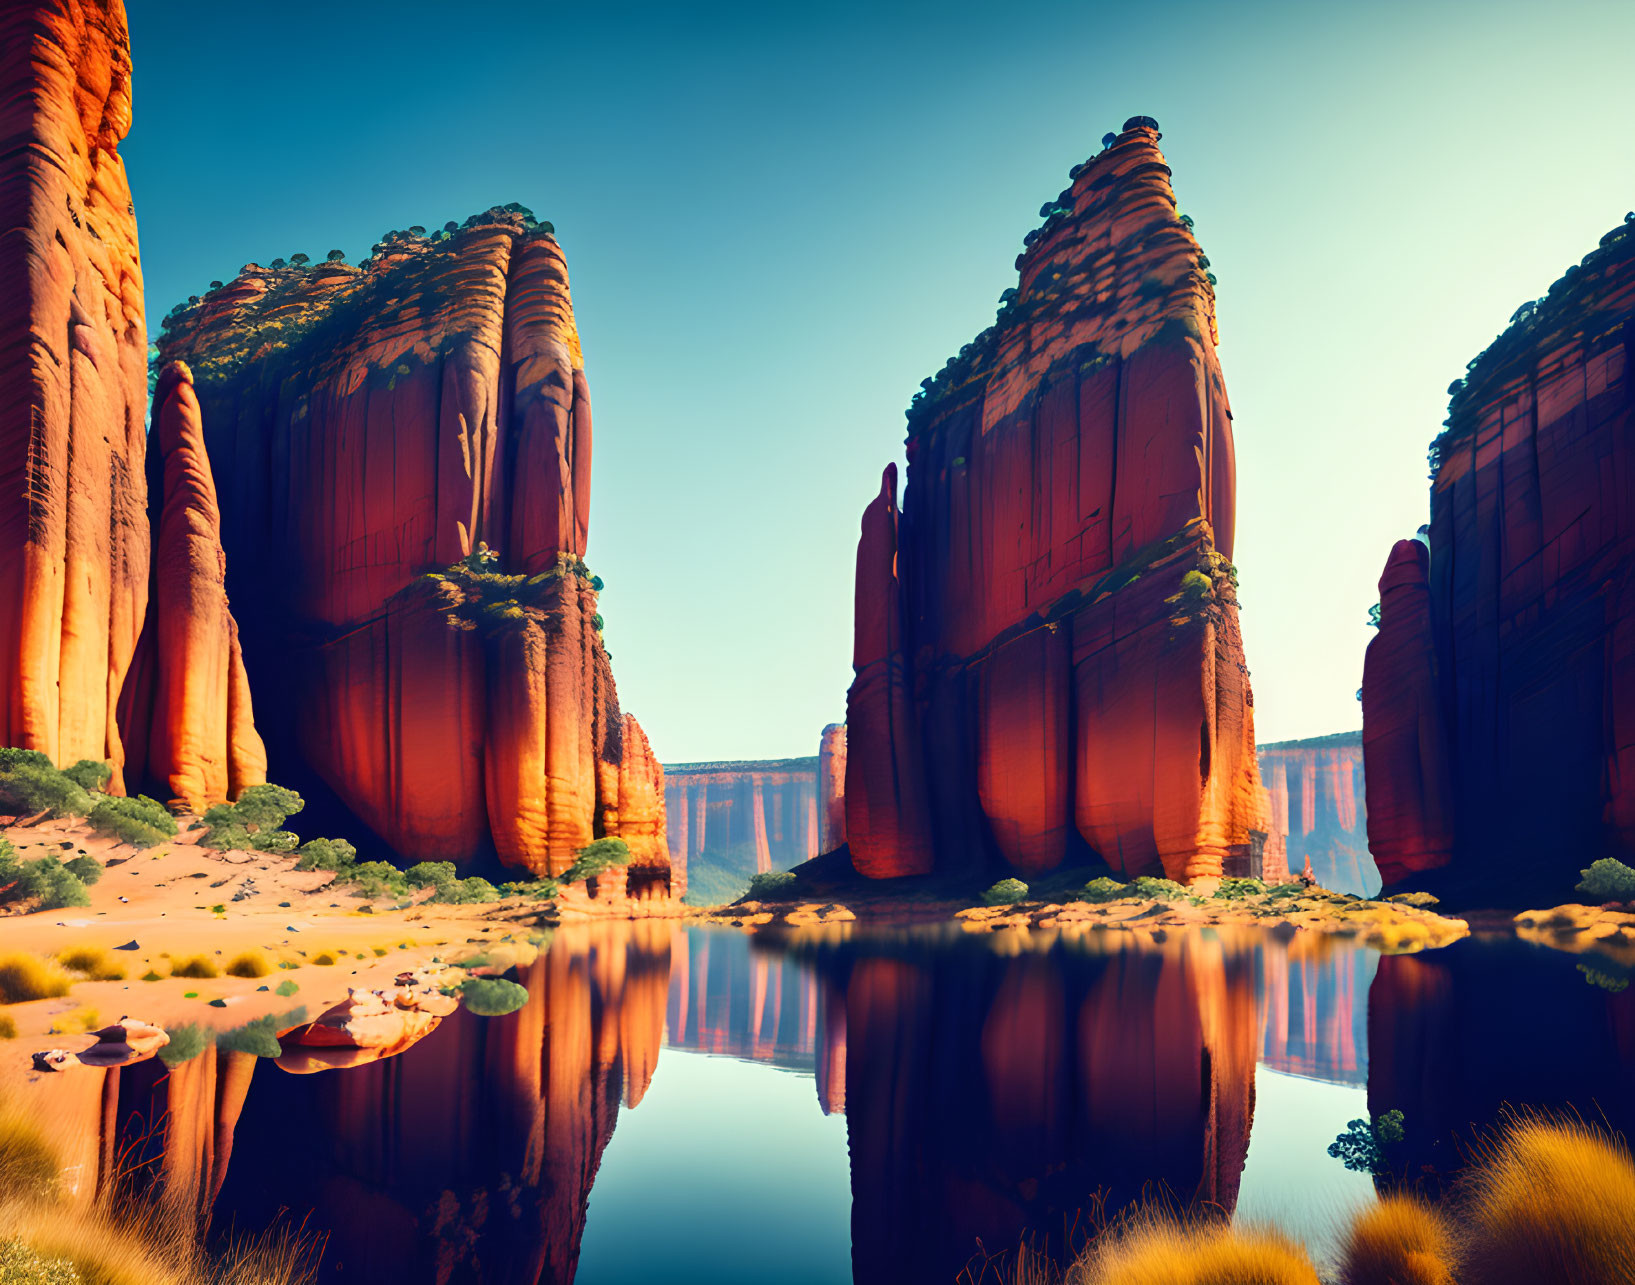 Majestic red sandstone cliffs mirrored in serene river under blue sky